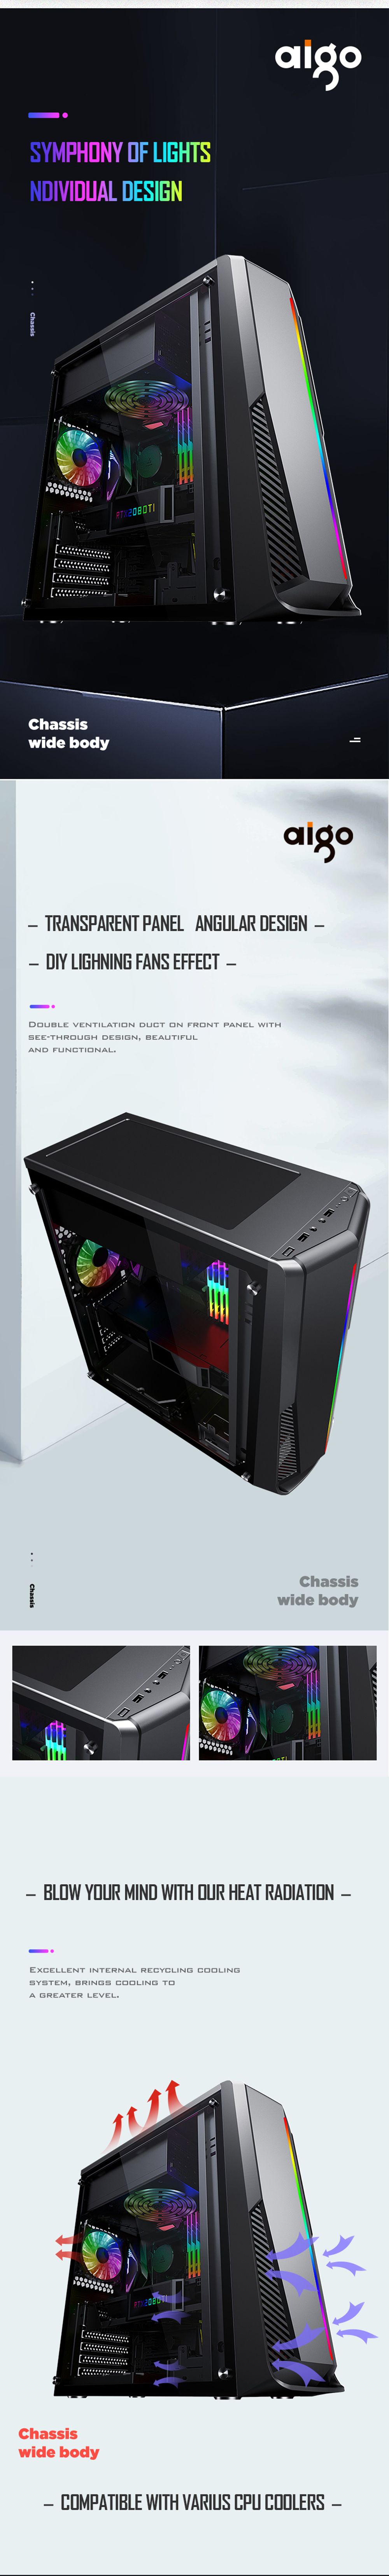 Aigo-Rainbow6-Gaming-Computer-Case-Acrylic-Side-Panel-ATXM-ATX-VGA-Supported-USB-30-1665914